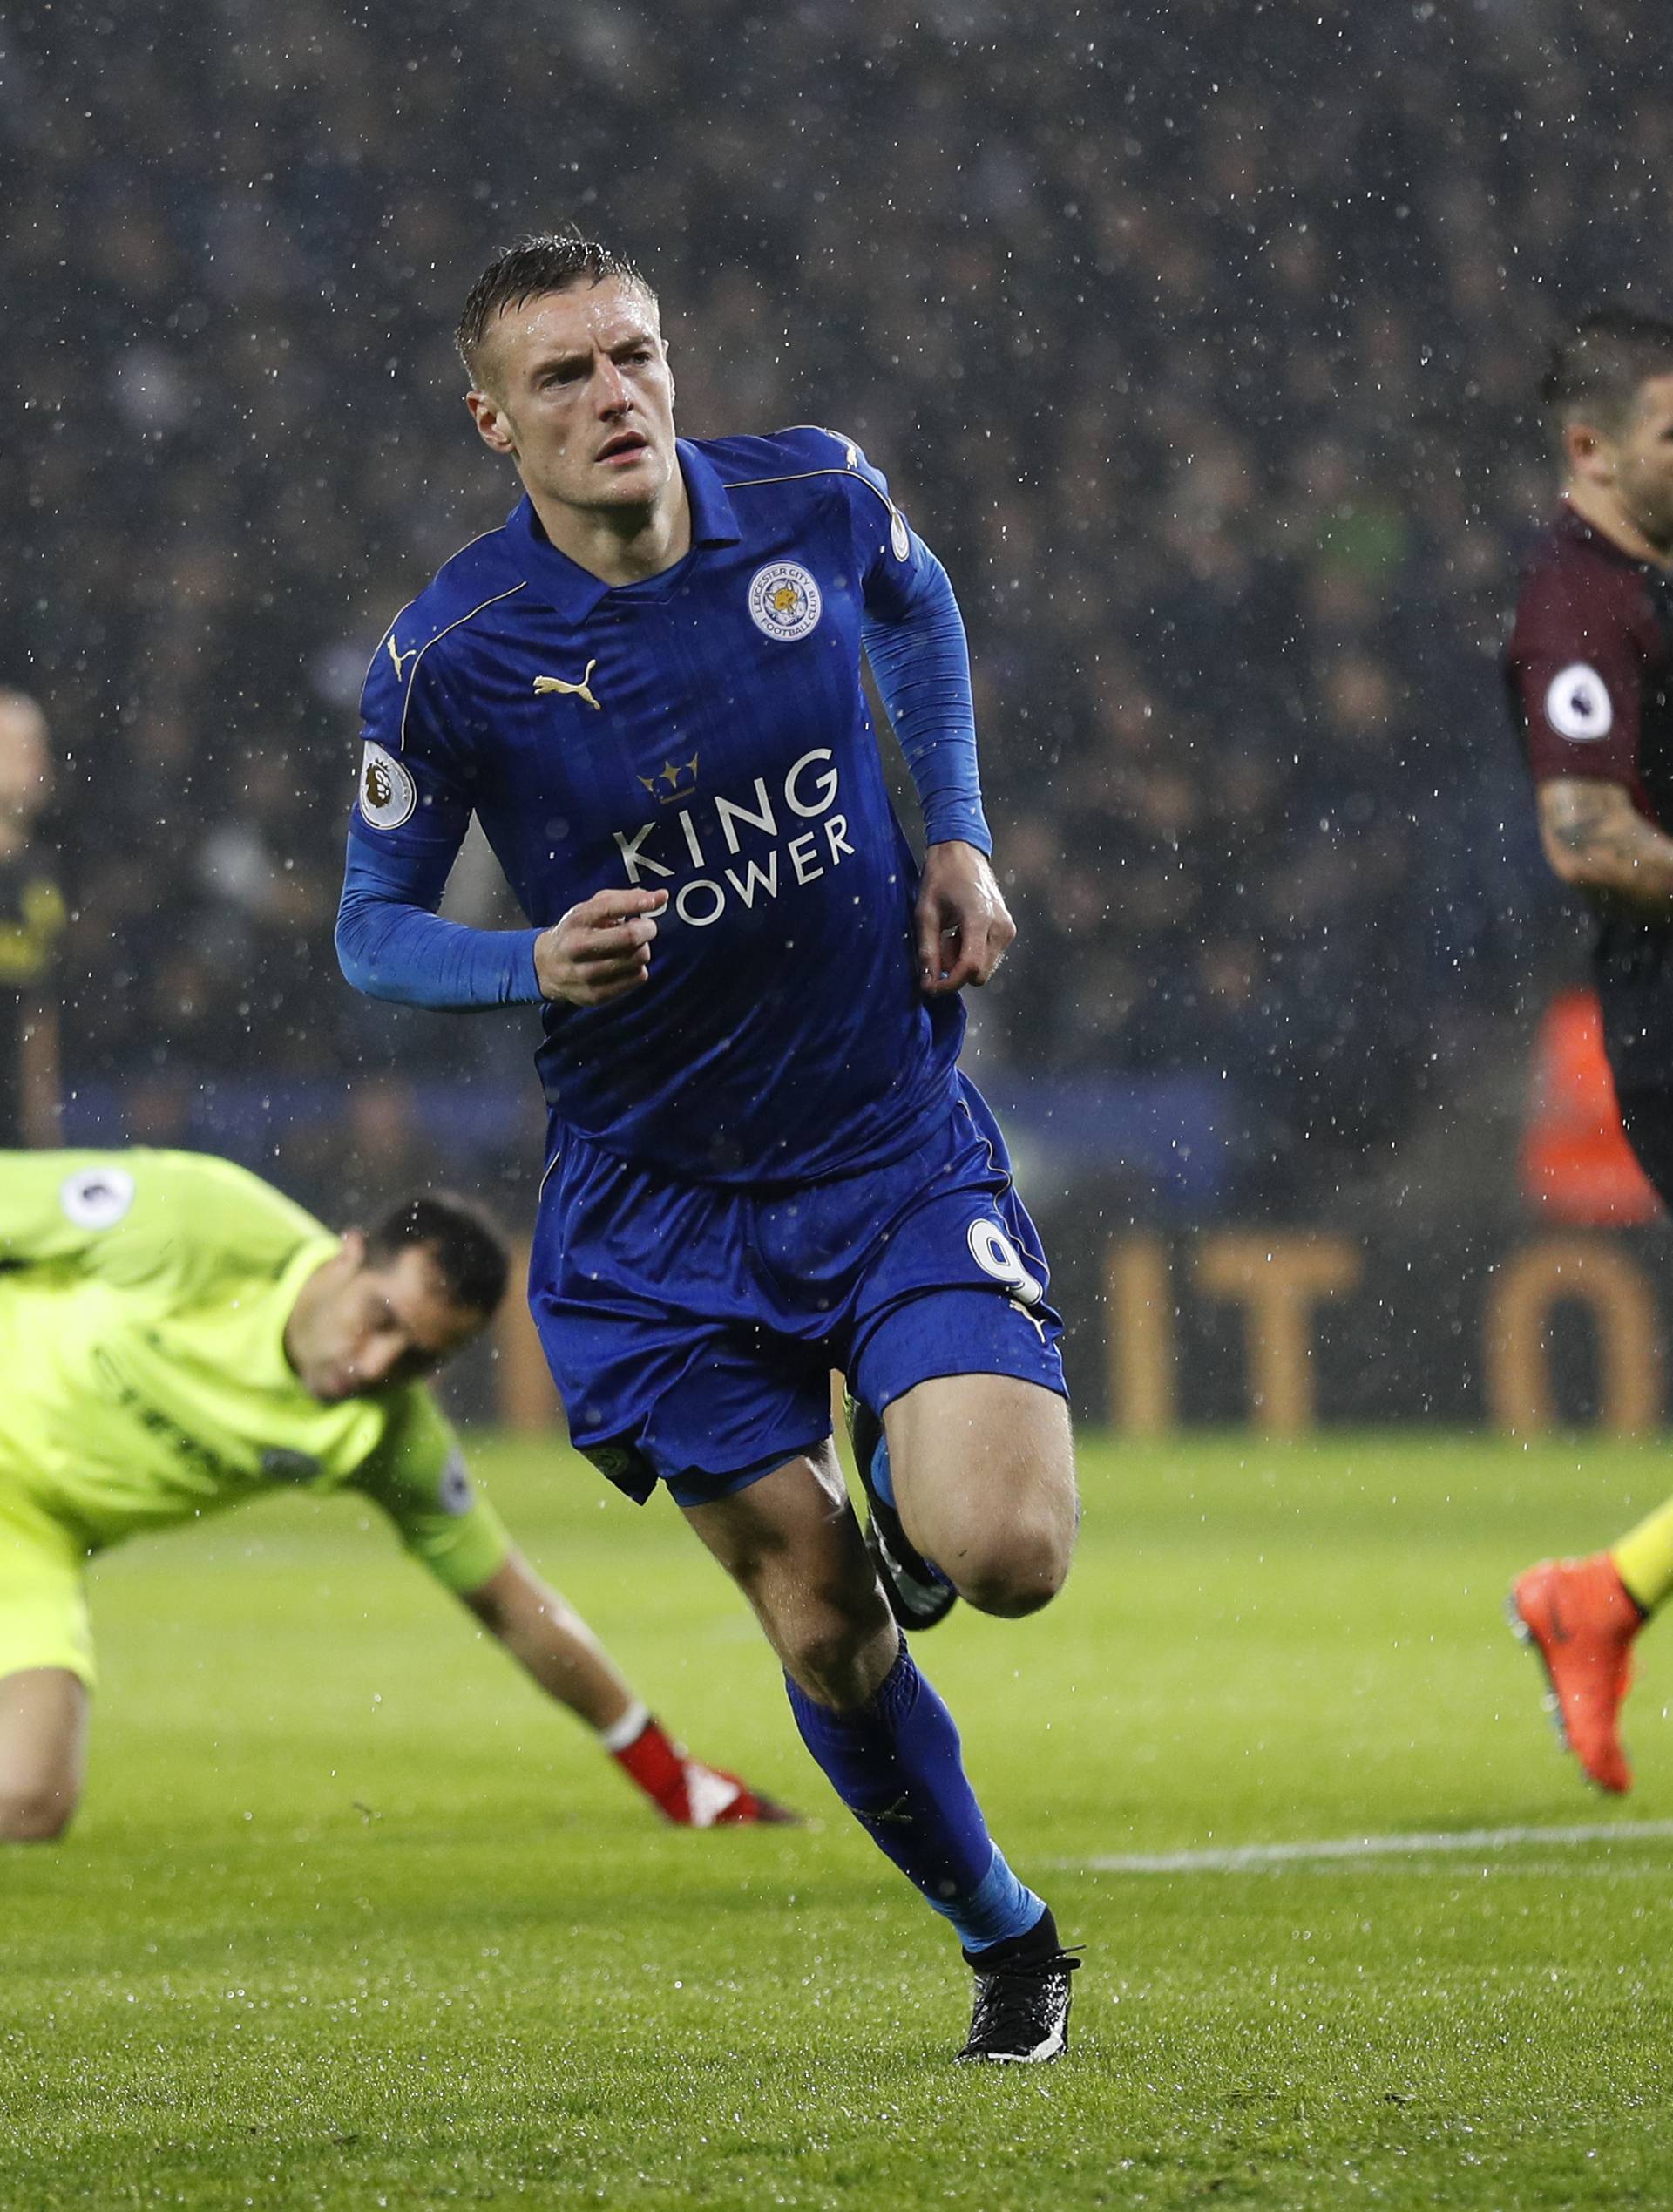 Leicester City's Jamie Vardy celebrates scoring their first goal